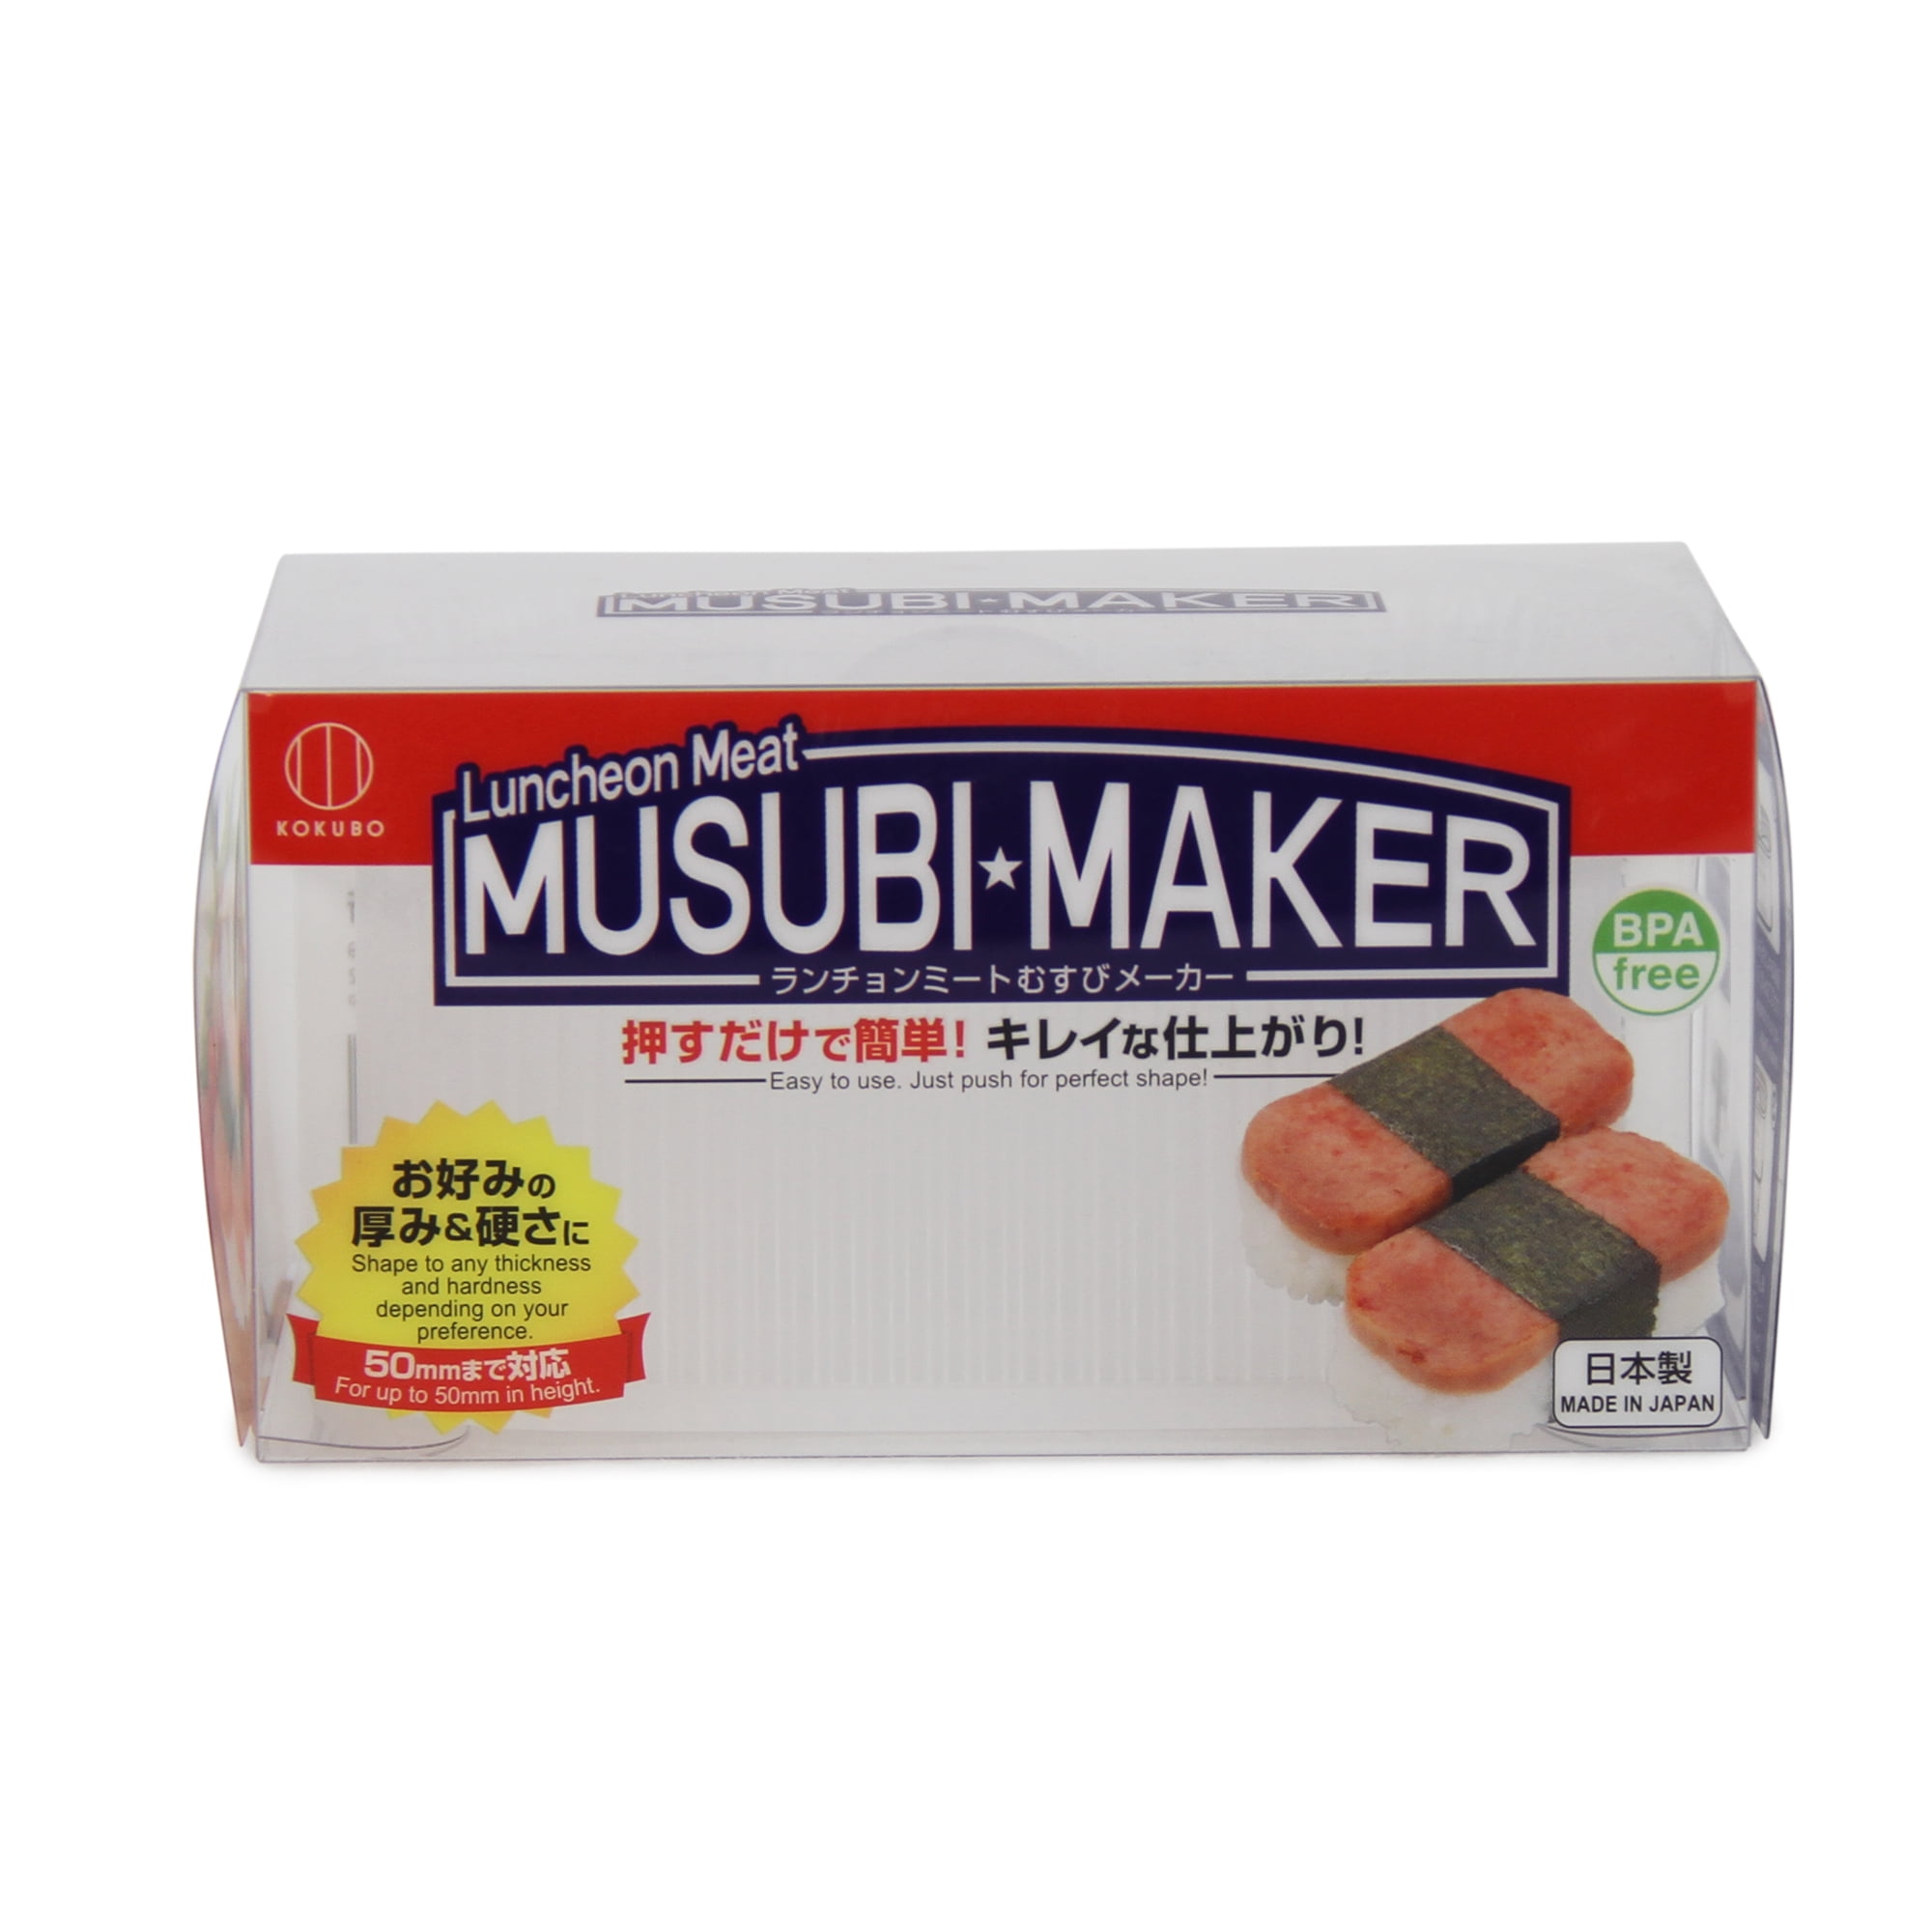 Double Kine SS Musubi Maker for Making 2 Spam Musubi 